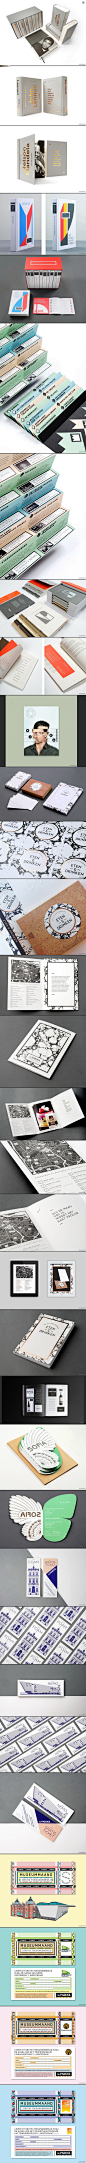 MARA书籍与卡片设计作品欣赏-[32P]---平面设计